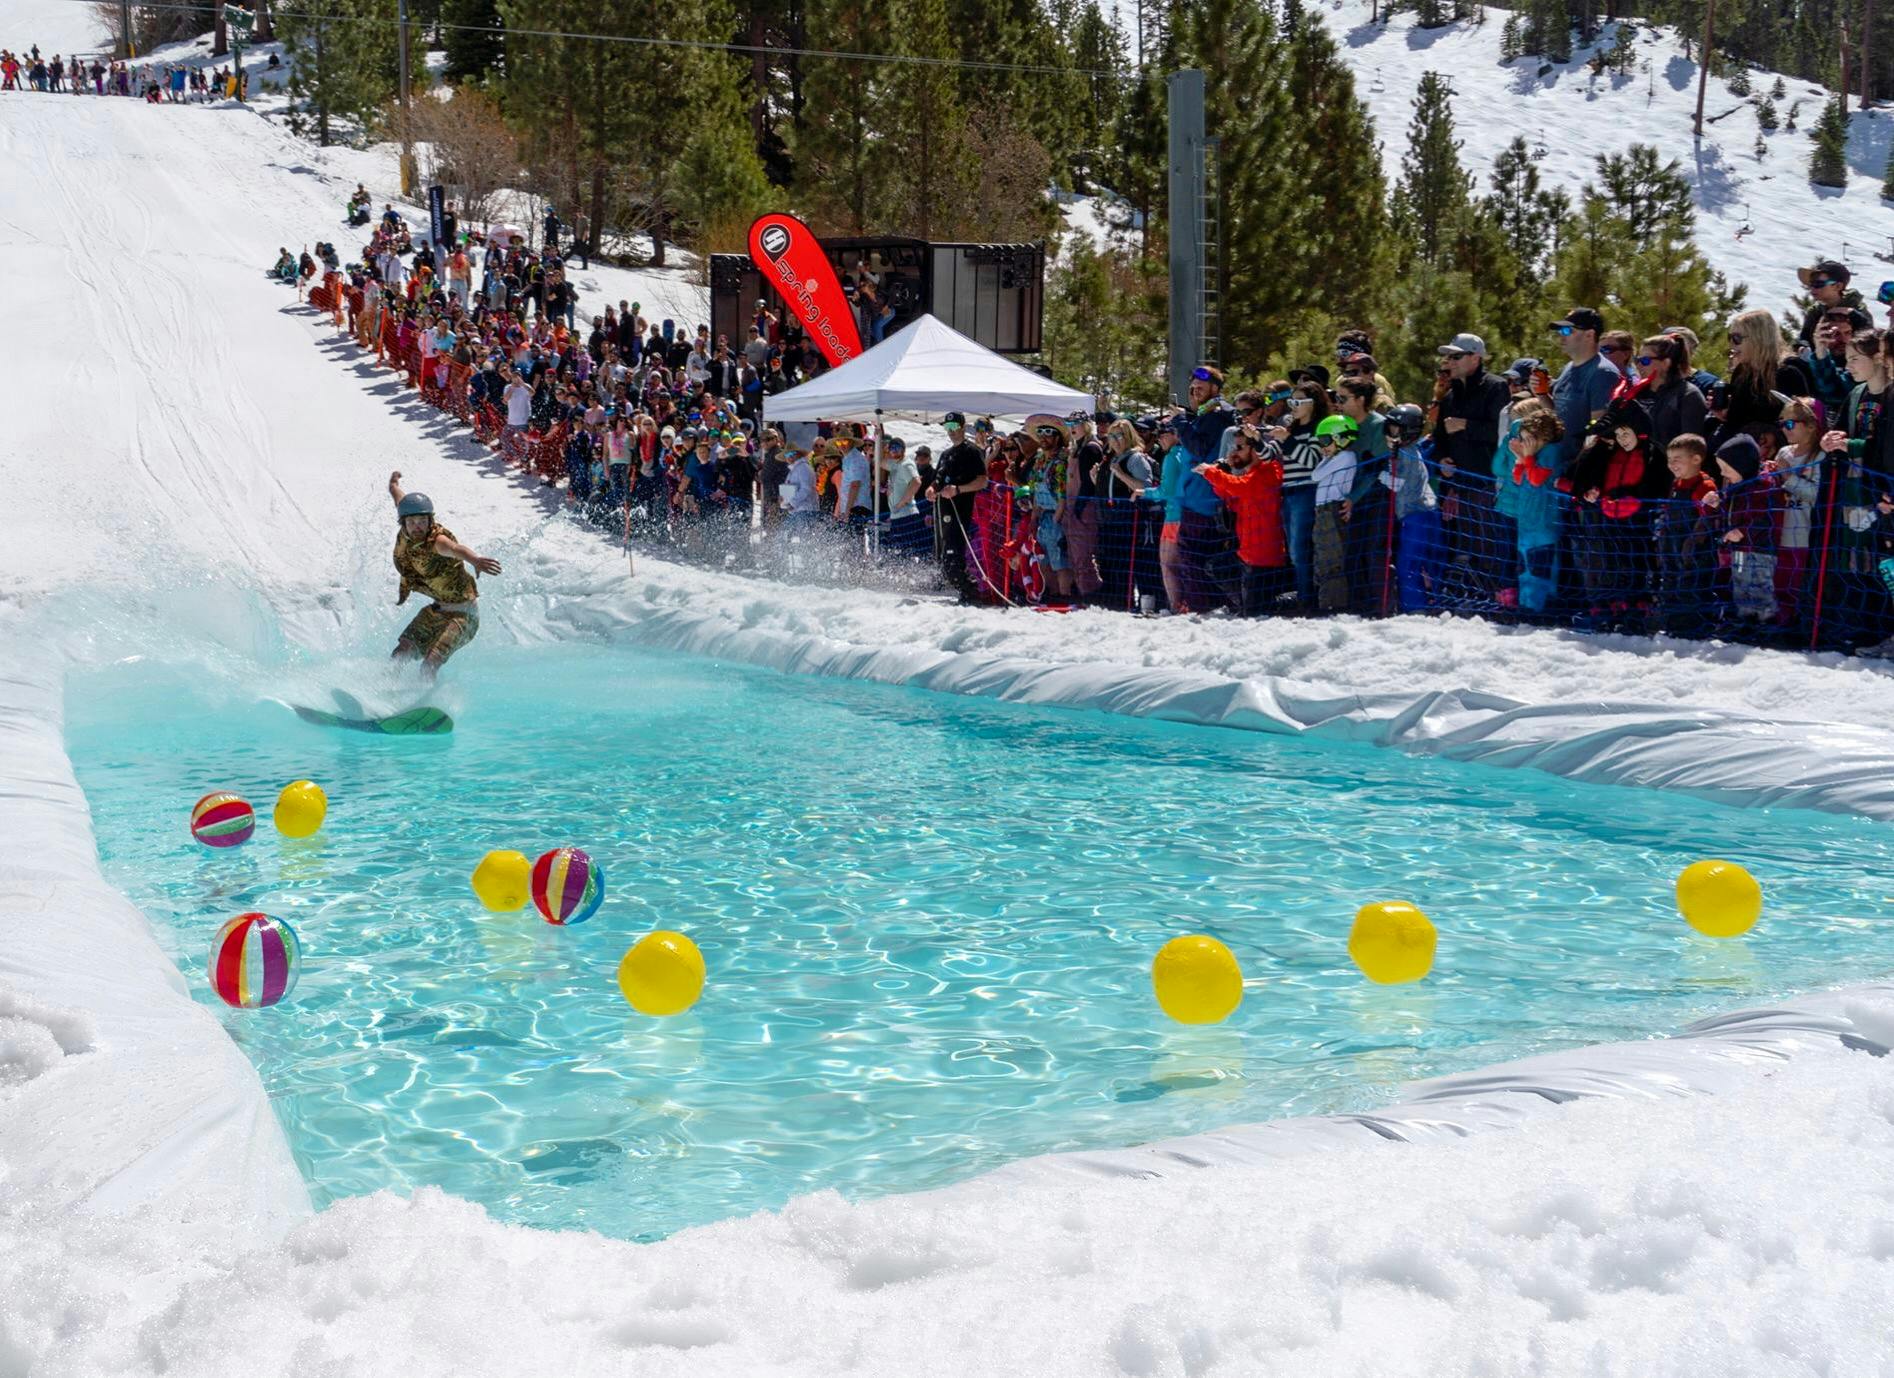 A snowboarder doing a pond skim at a ski resort. 